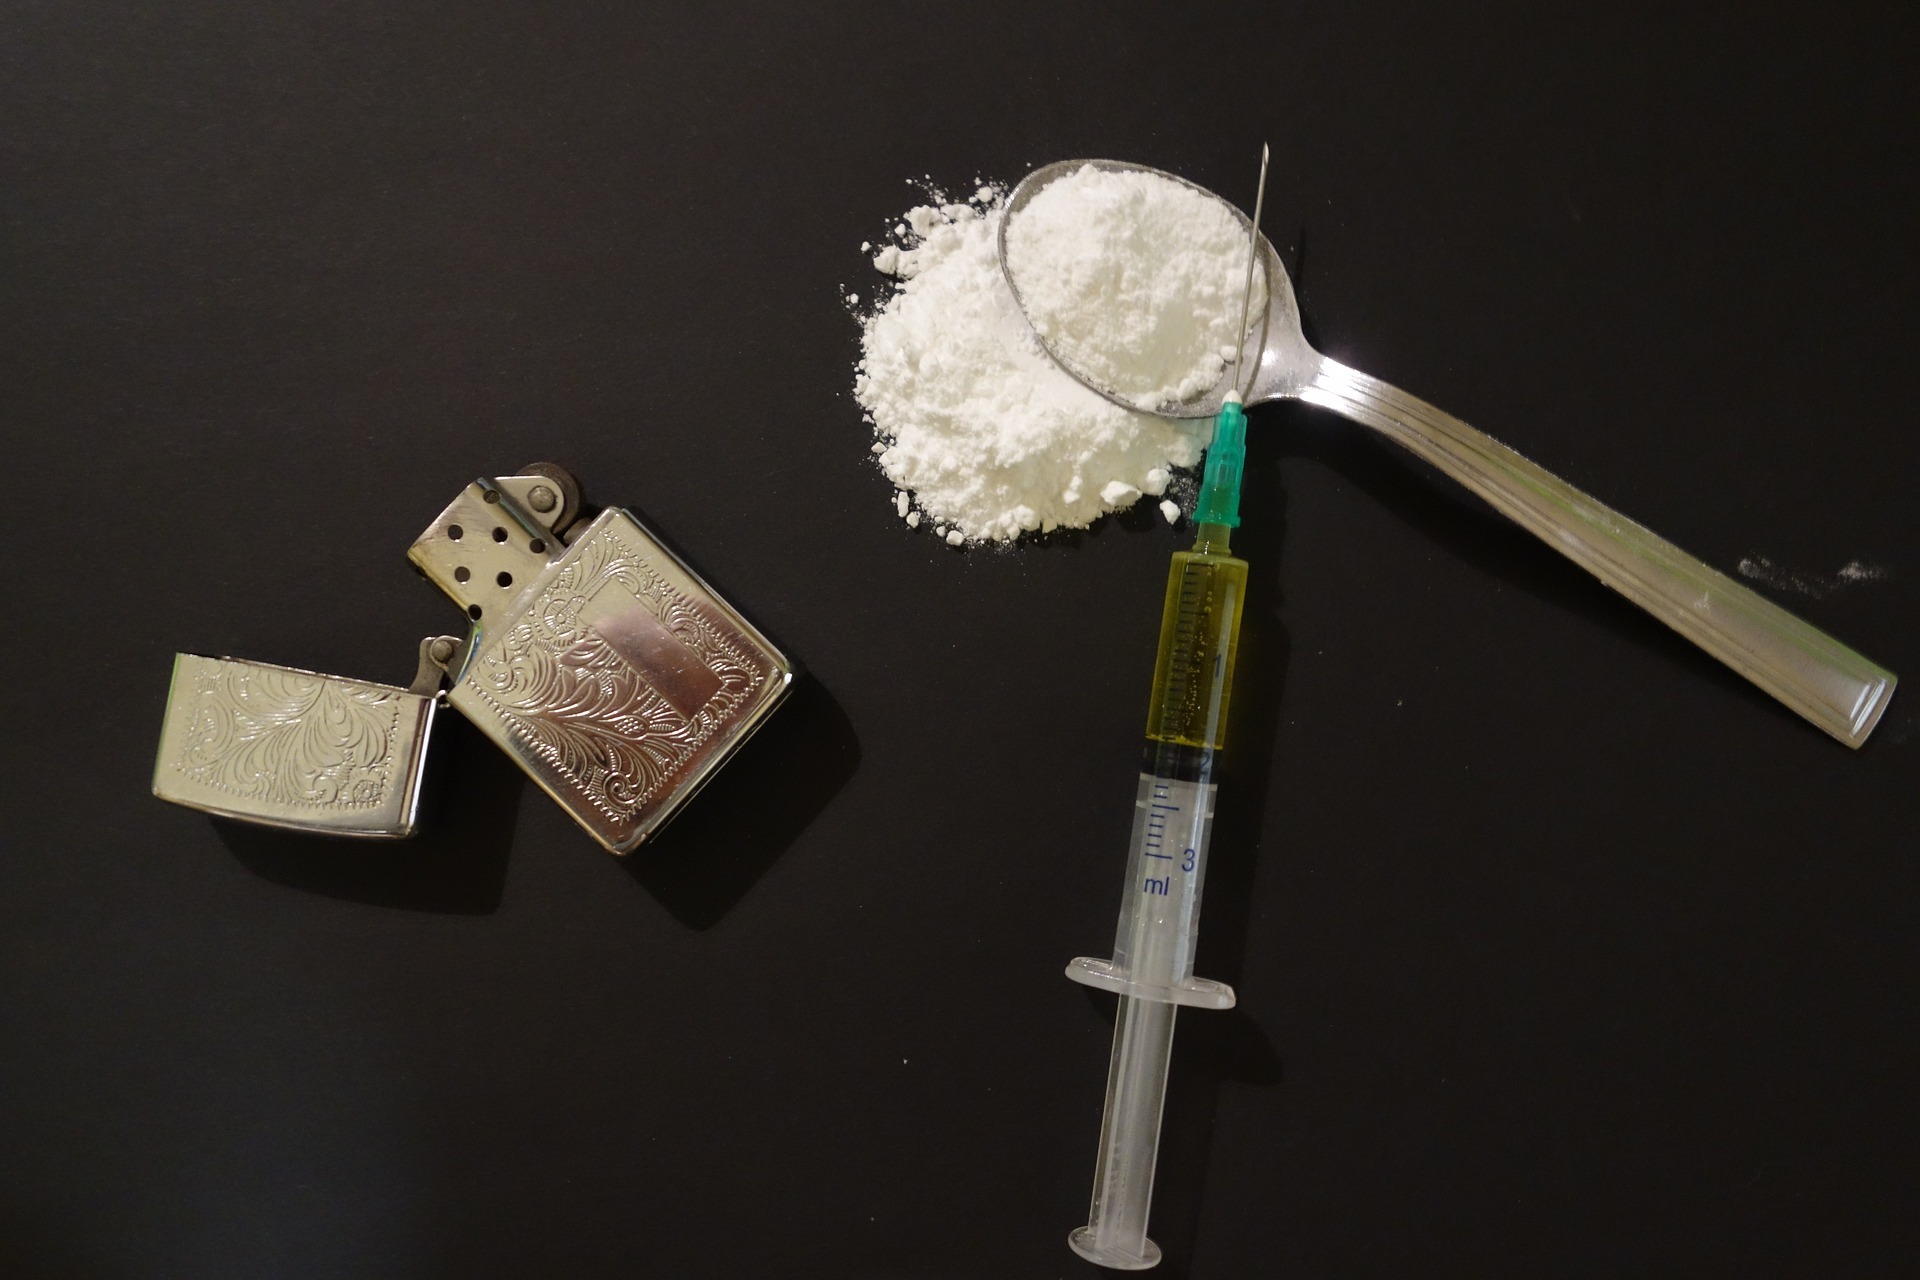 Drugs - Spoon and syringe